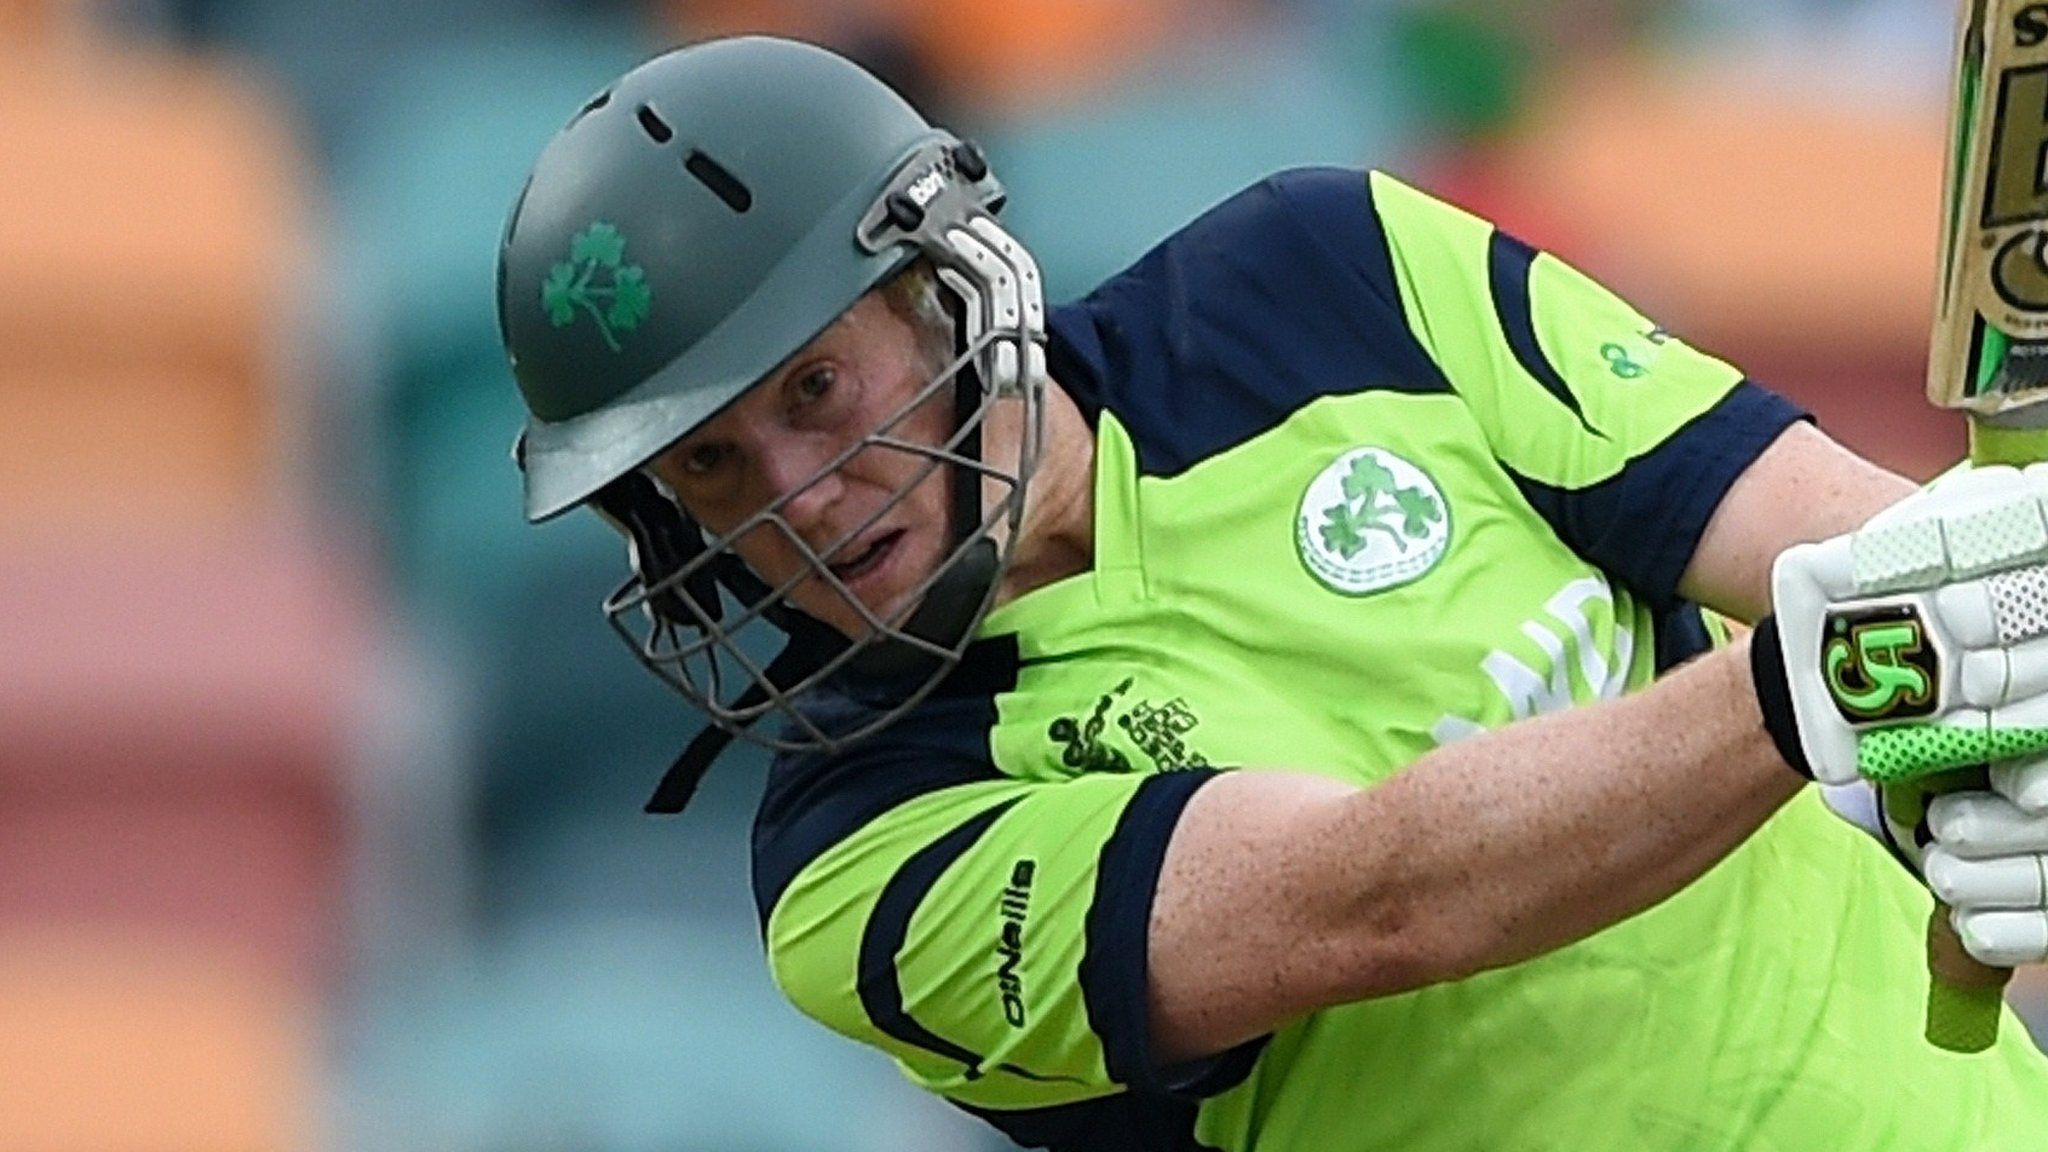 Kevin O'Brien's 40 runs helped Ireland beat the UAE in Dubai